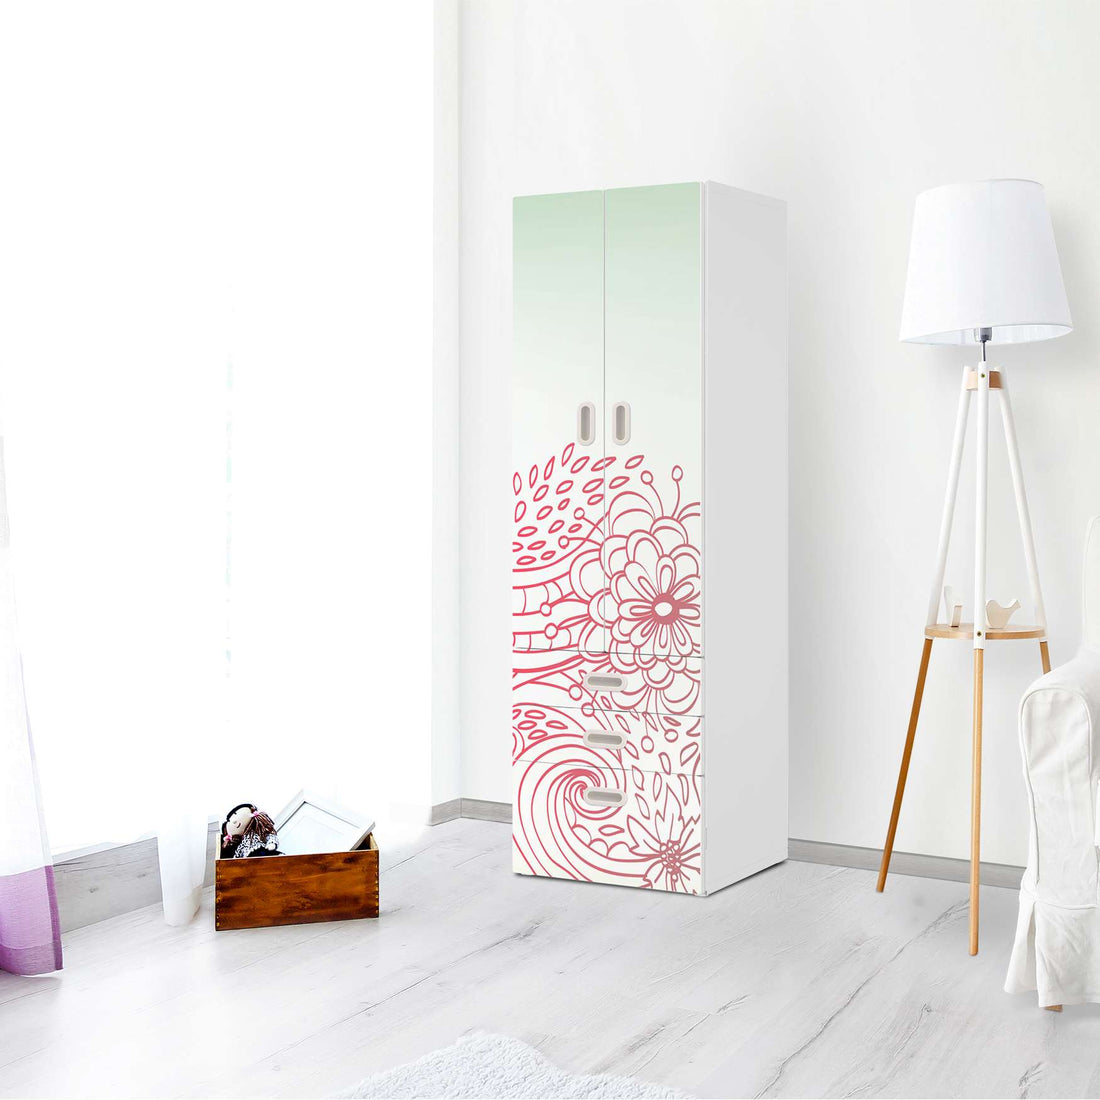 Klebefolie Floral Doodle - IKEA Stuva / Fritids kombiniert - 3 Schubladen und 2 große Türen - Kinderzimmer